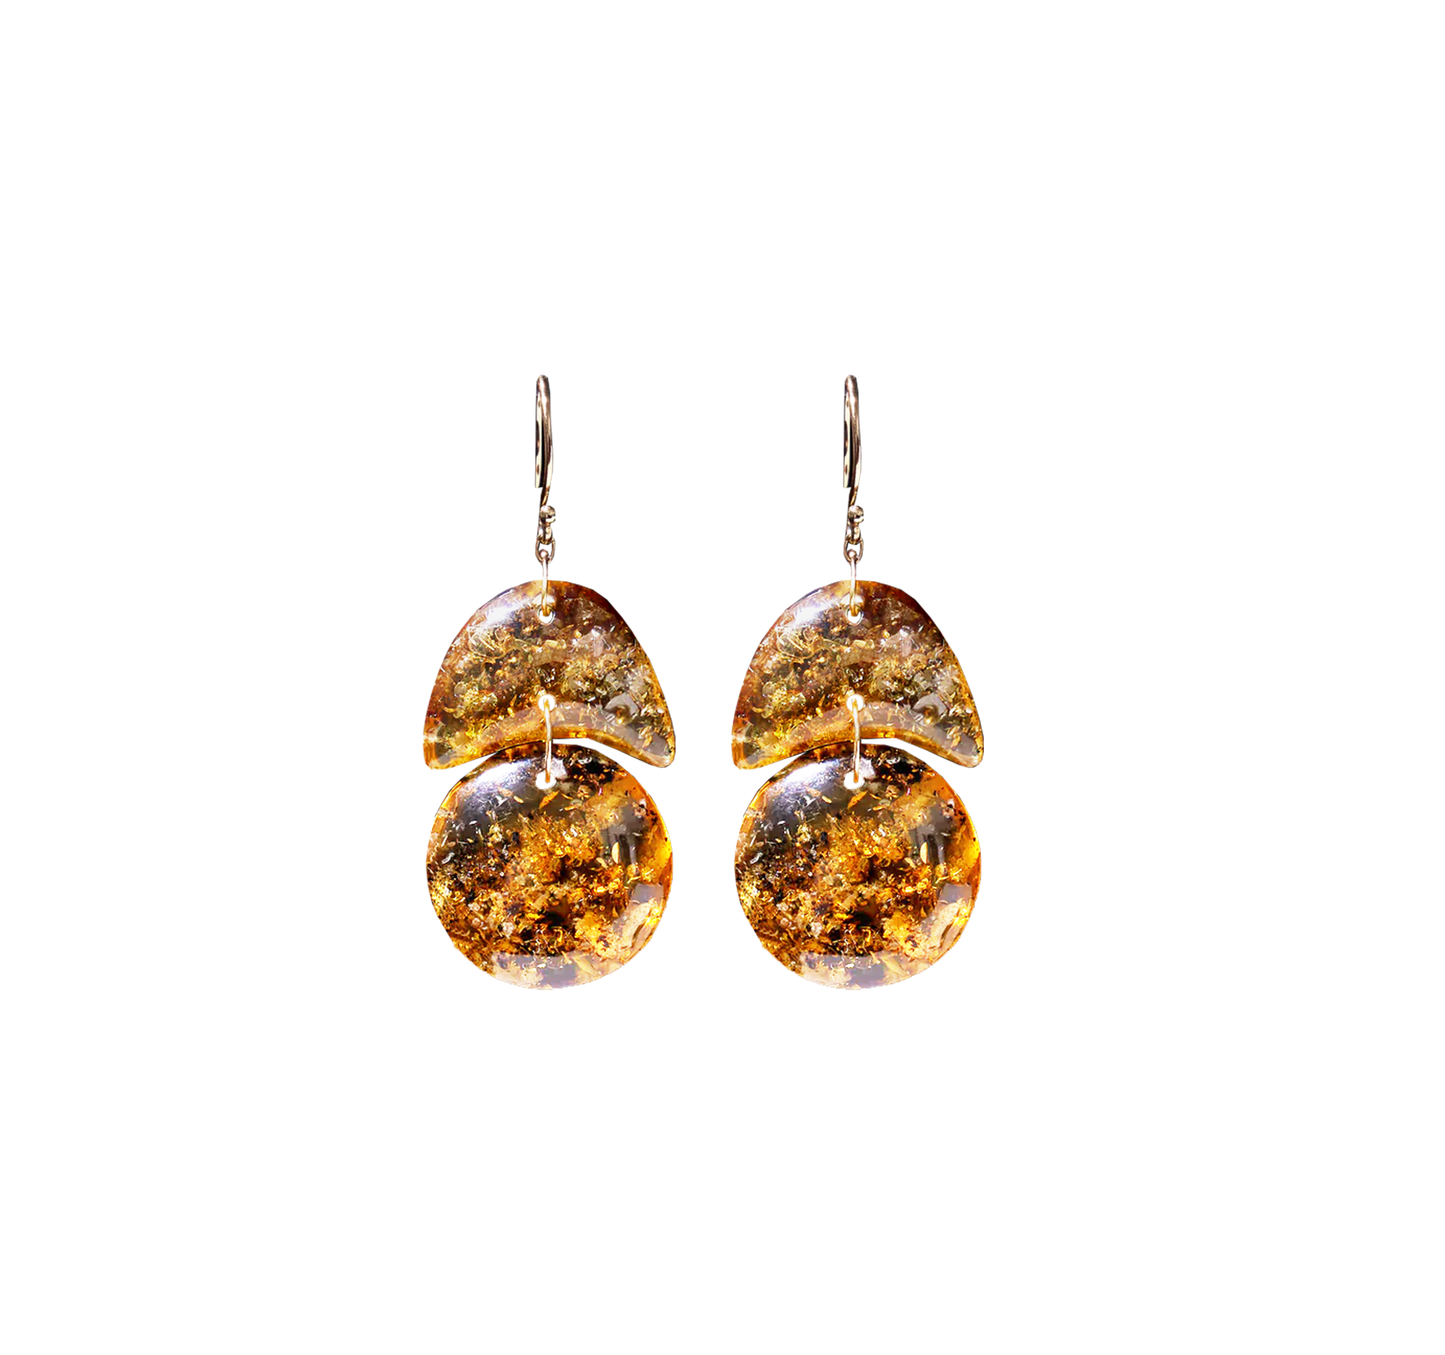 Tiny Arp Earrings in Amber